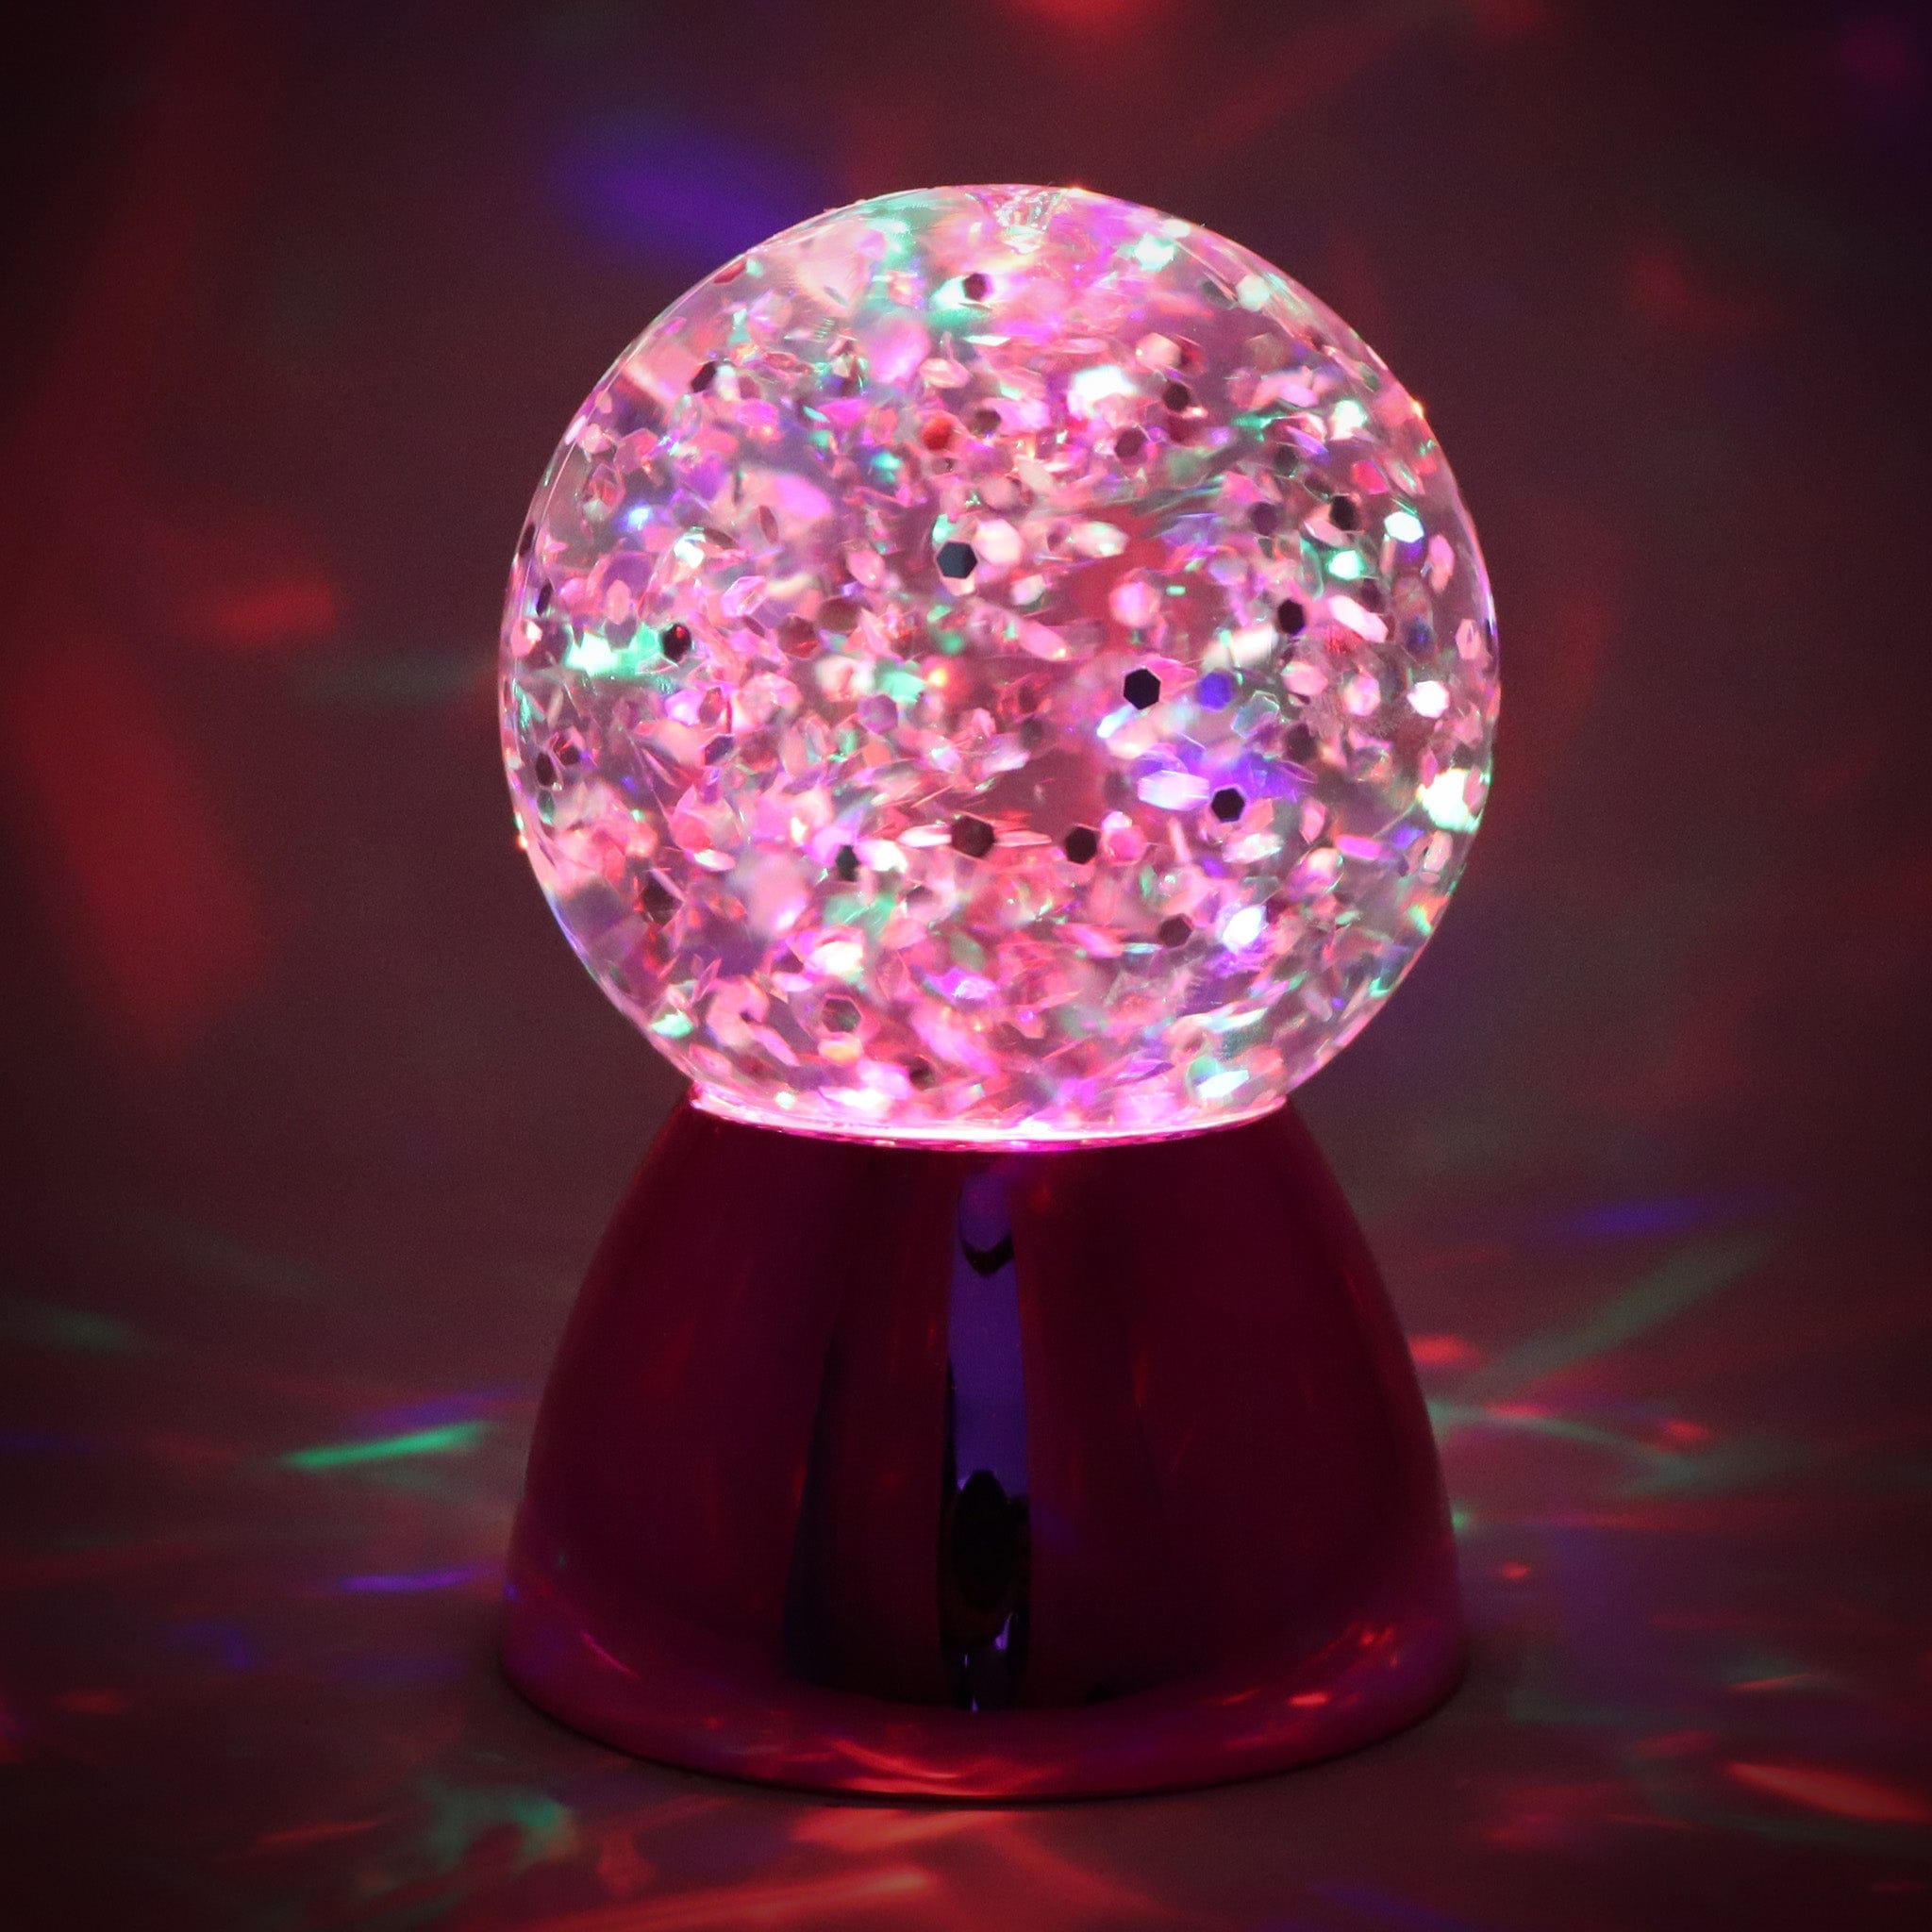 Pink Poppy Girls Accessory Glitter Waterball Light